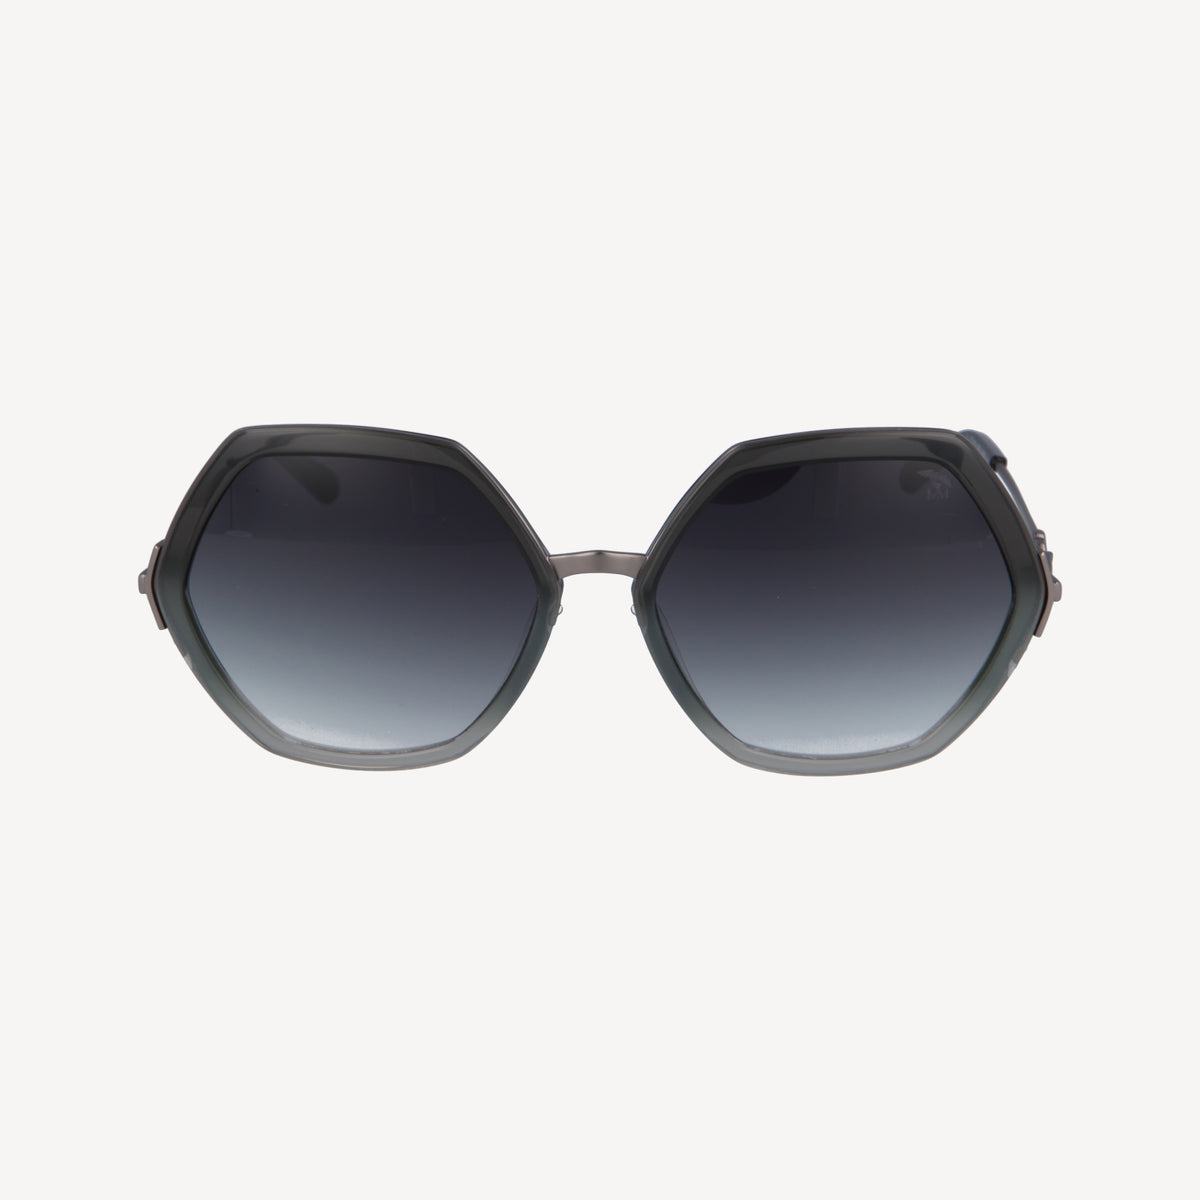 AGNEL | Sonnenbrille classic schwarz/altsilber - frontal